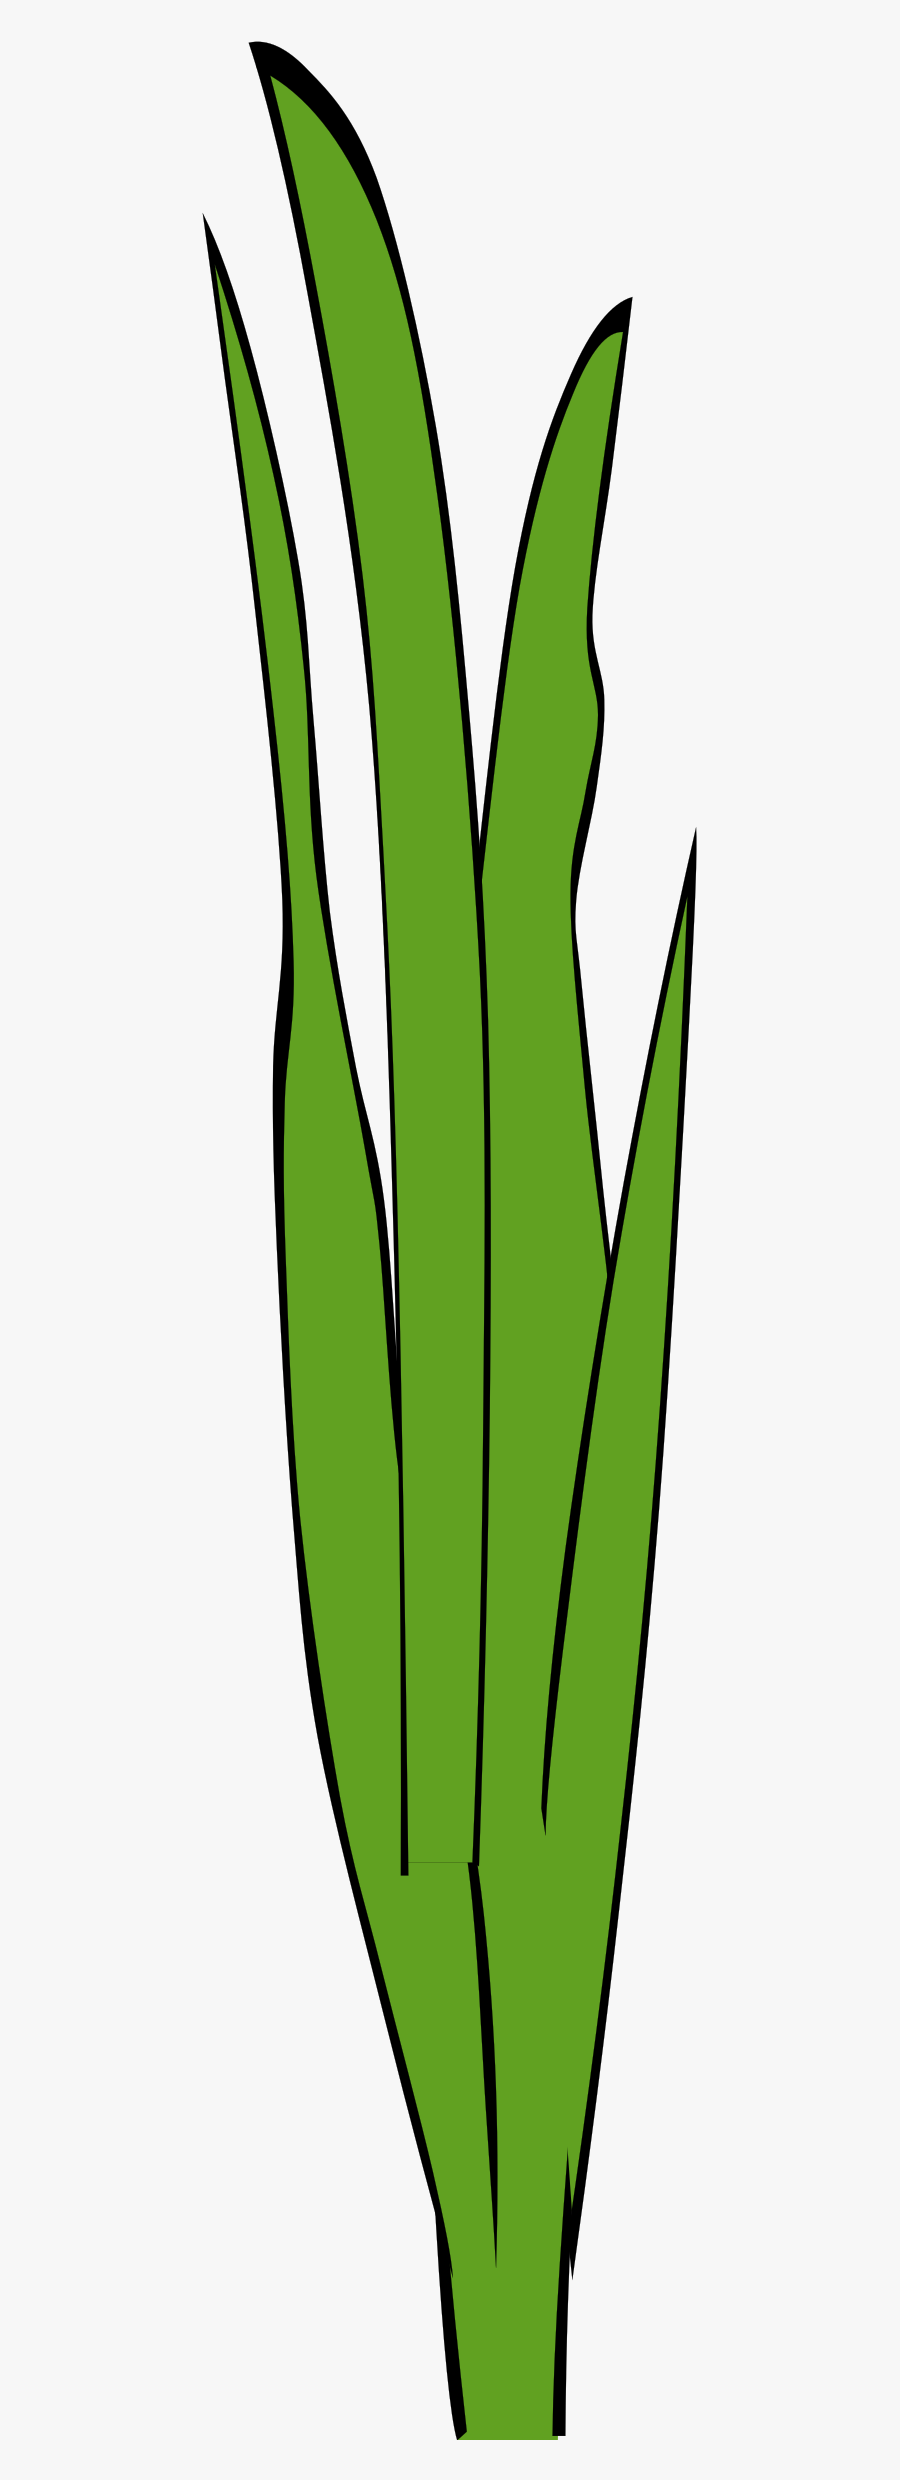 Sea Grass Clipart Animated - Cartoon Grass Blades Png, Transparent Clipart